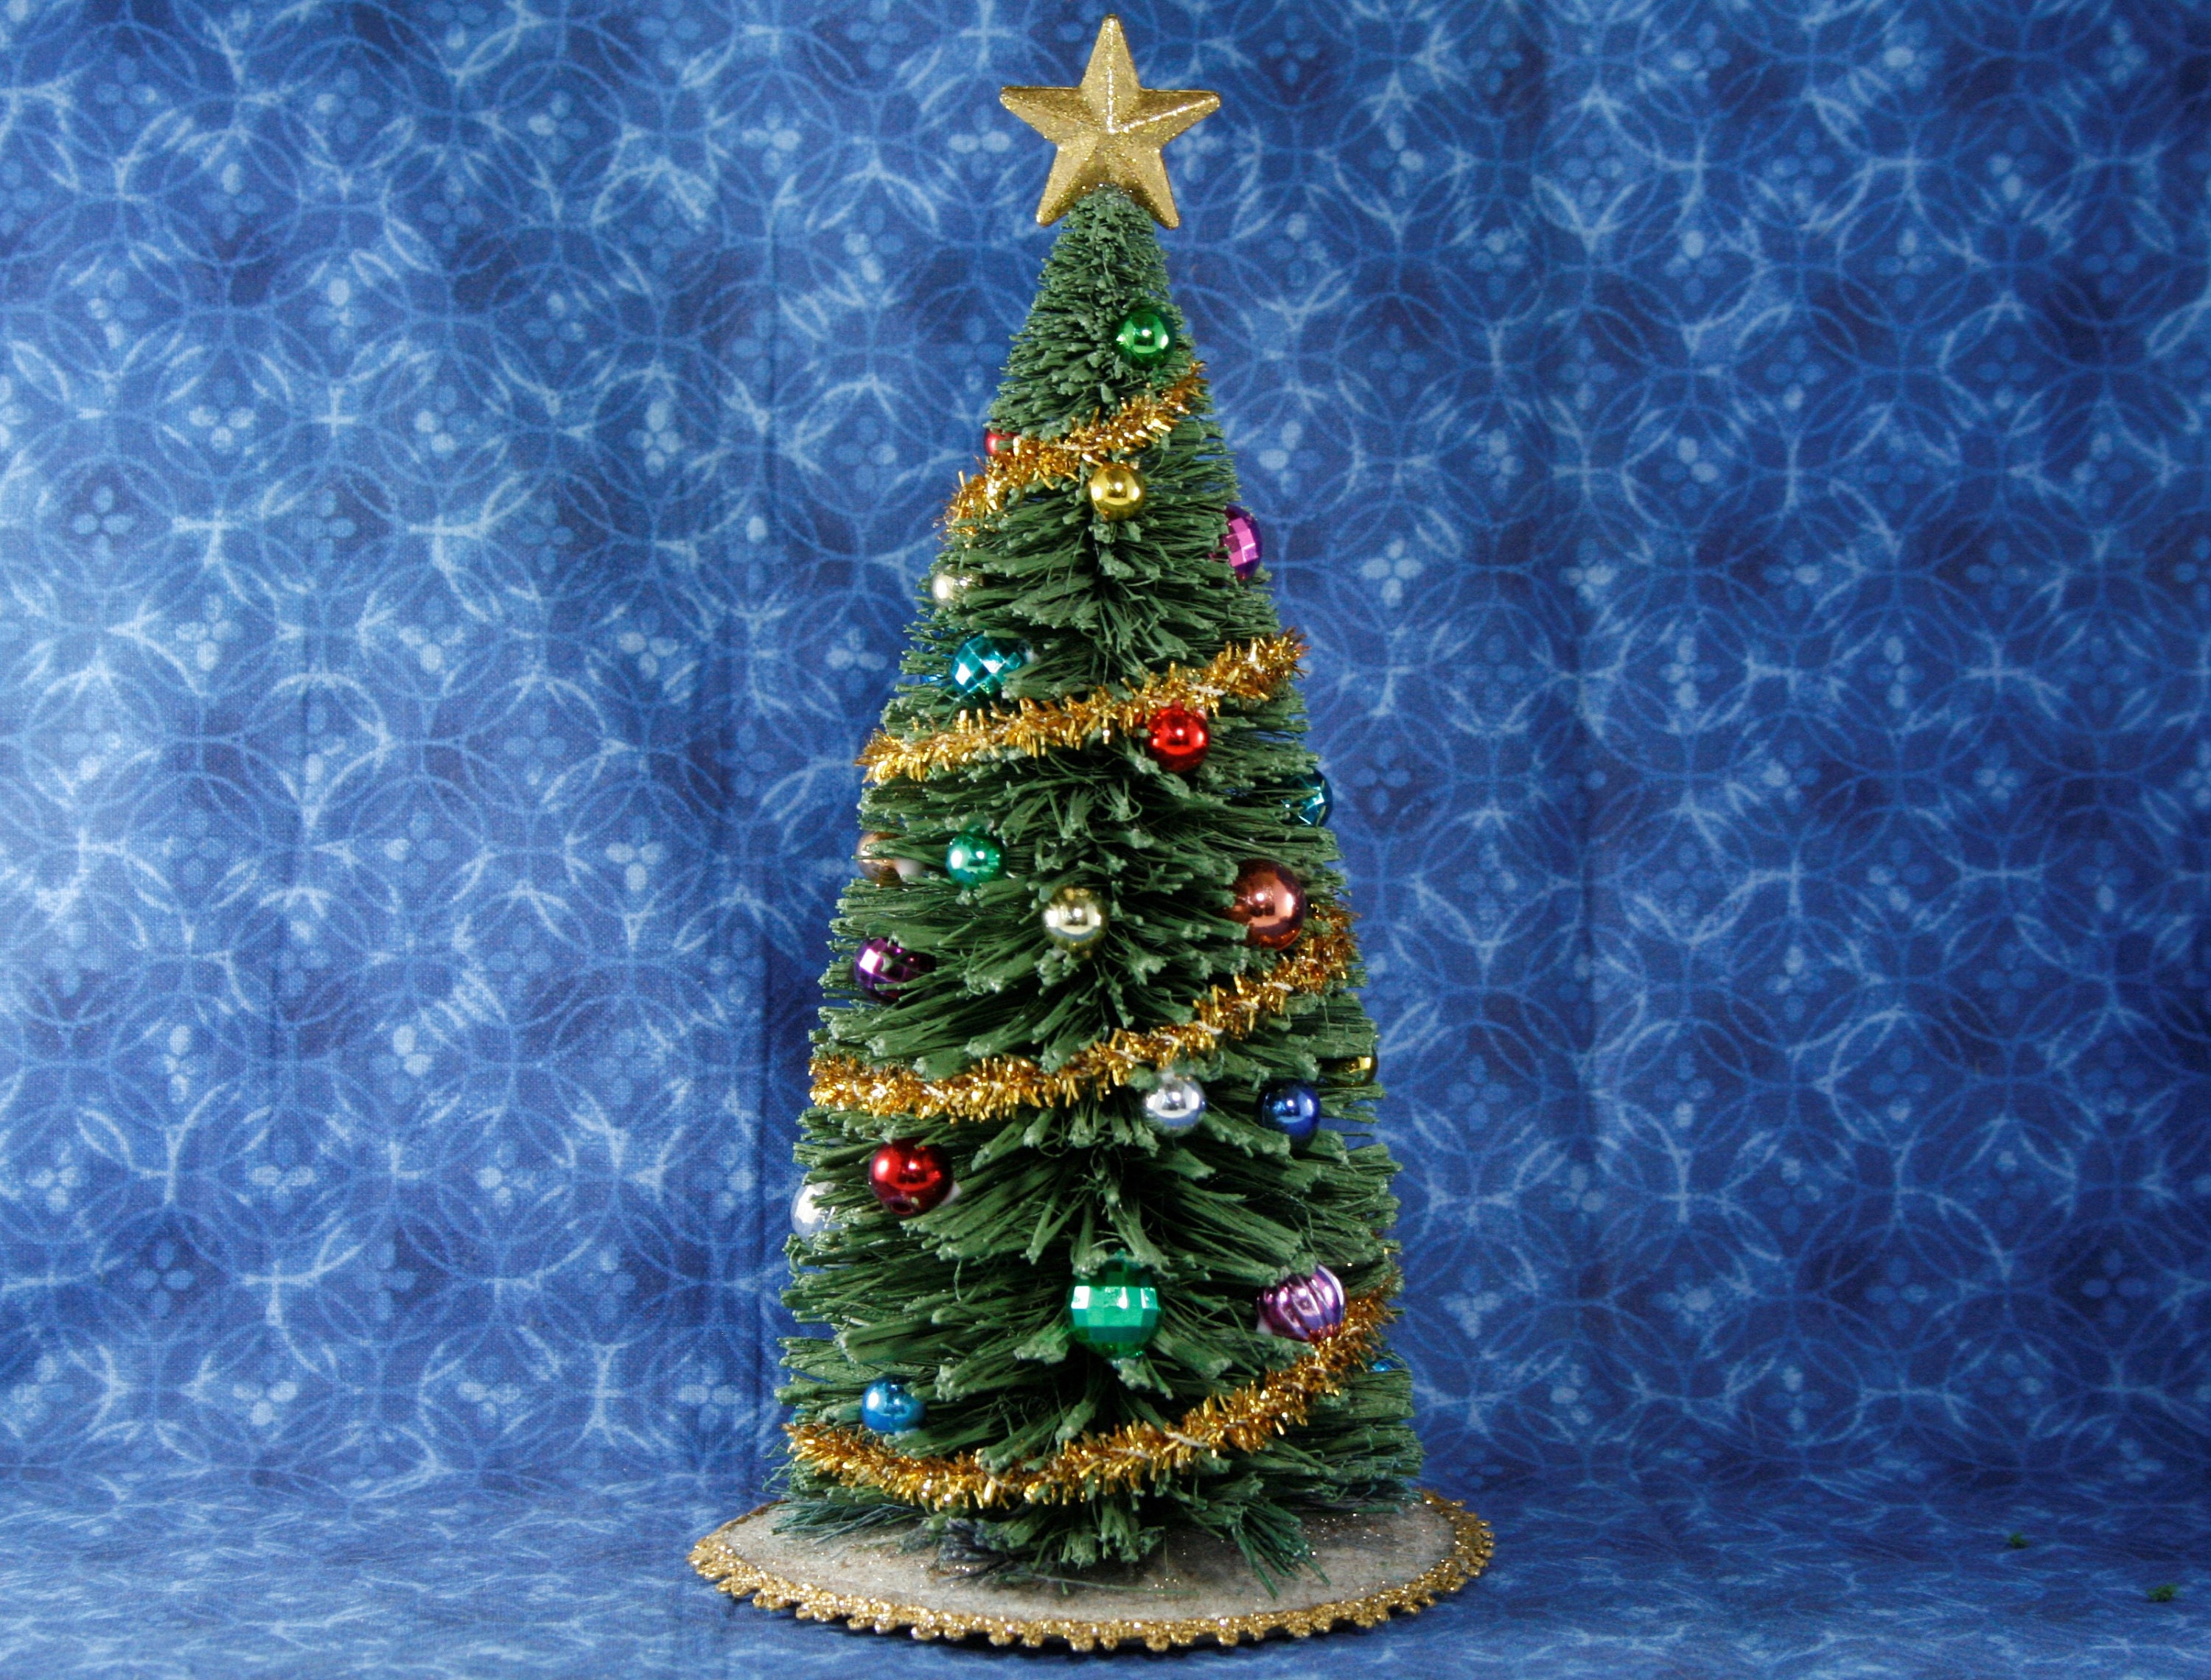 ONE Miniature Pine Tree, 1:12 Scale, Doll House, Christmas